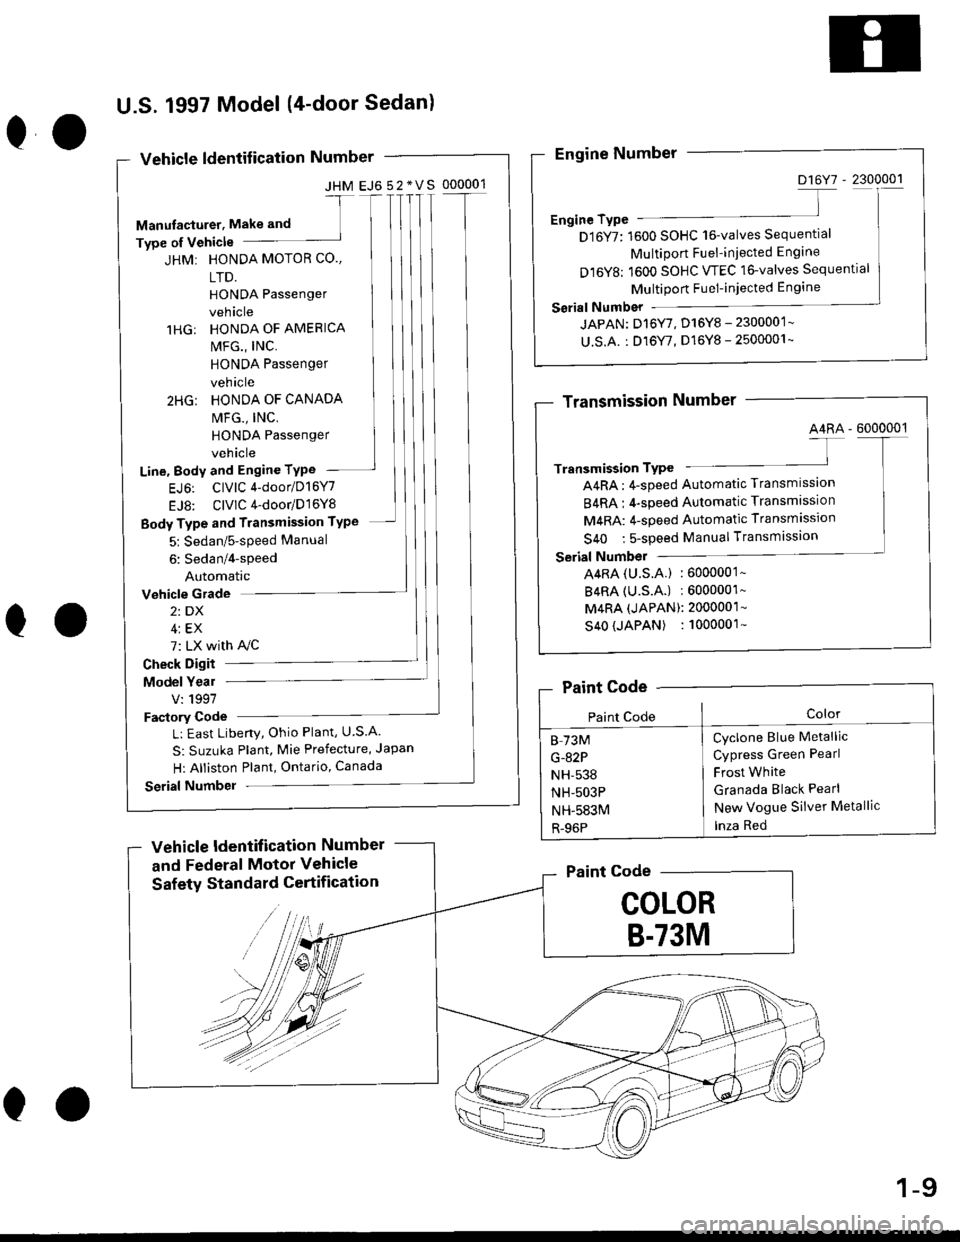 HONDA CIVIC 1998 6.G Workshop Manual 00
U.S. 1997 Model (4-door Sedanl
Vehicle ldentif ication Number
JHM EJ6 52*VS 000001
Manulaqturer. Make and 
-t
Type of Vehicle
HONDA MOTOR CO.,
LTD.
HONDA Passenger
vehicle
HONDA OF AMERICA
MFG., IN